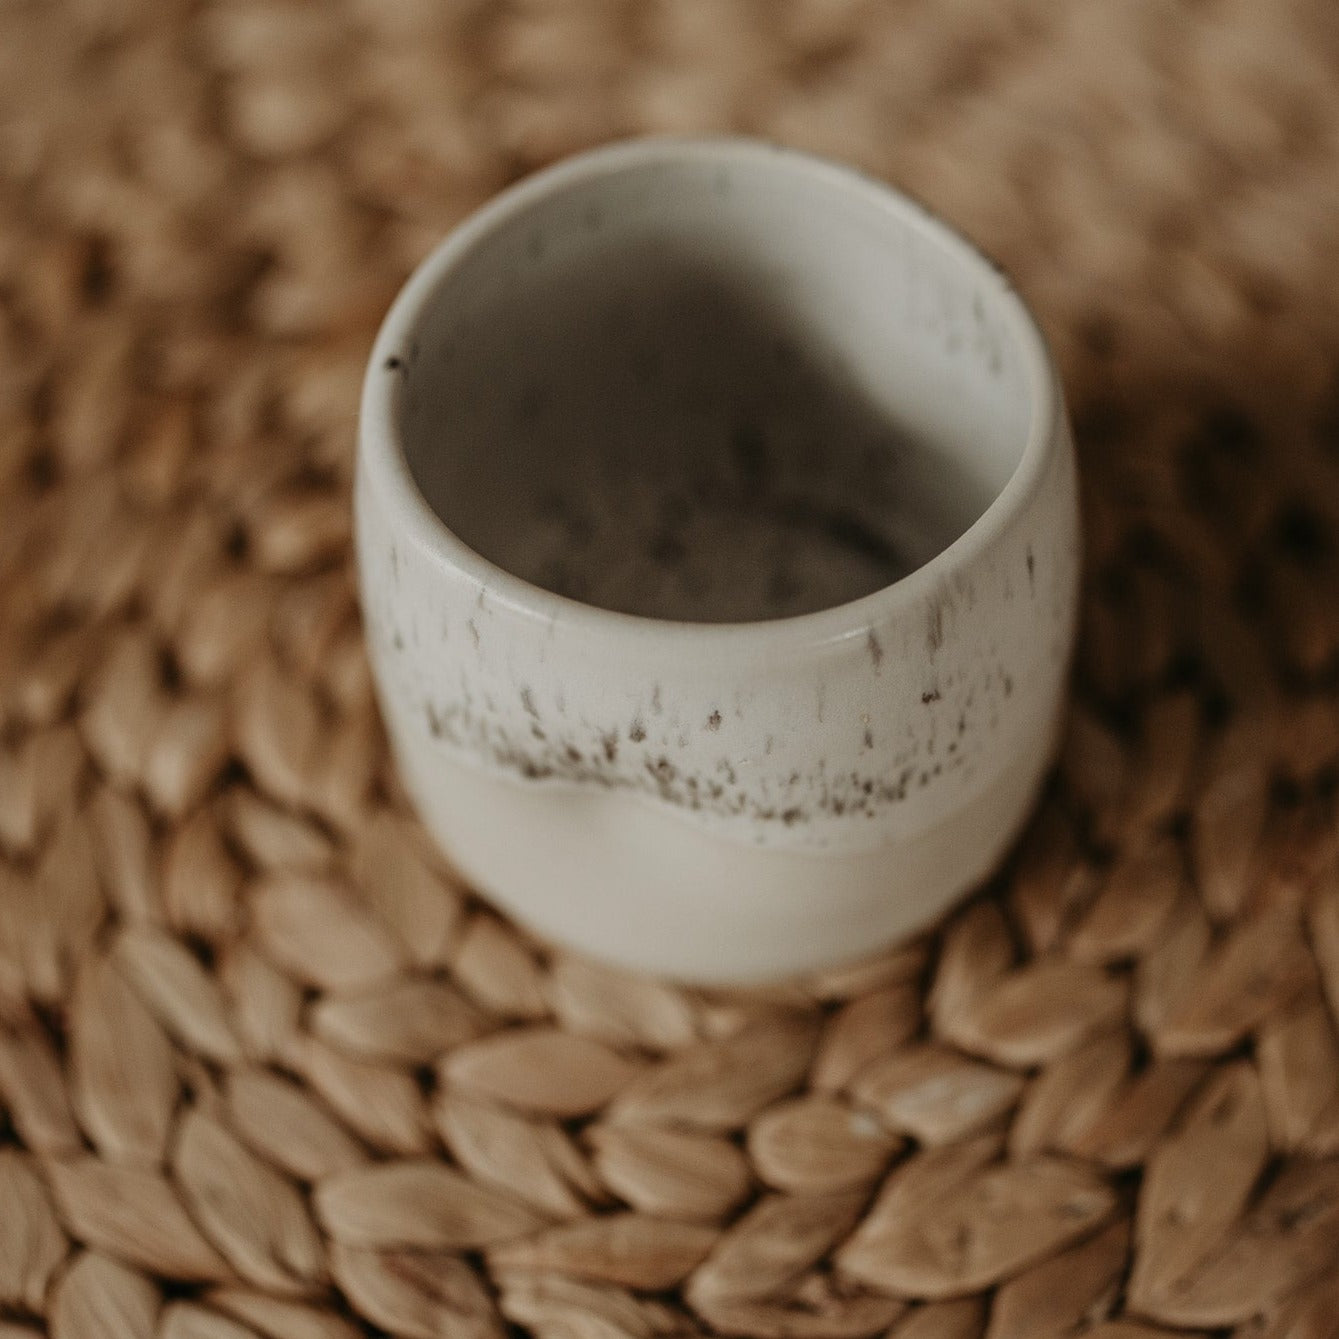 Modern Double Espresso Mug: White with speckled glaze, perfect for 250ml espresso drinks.